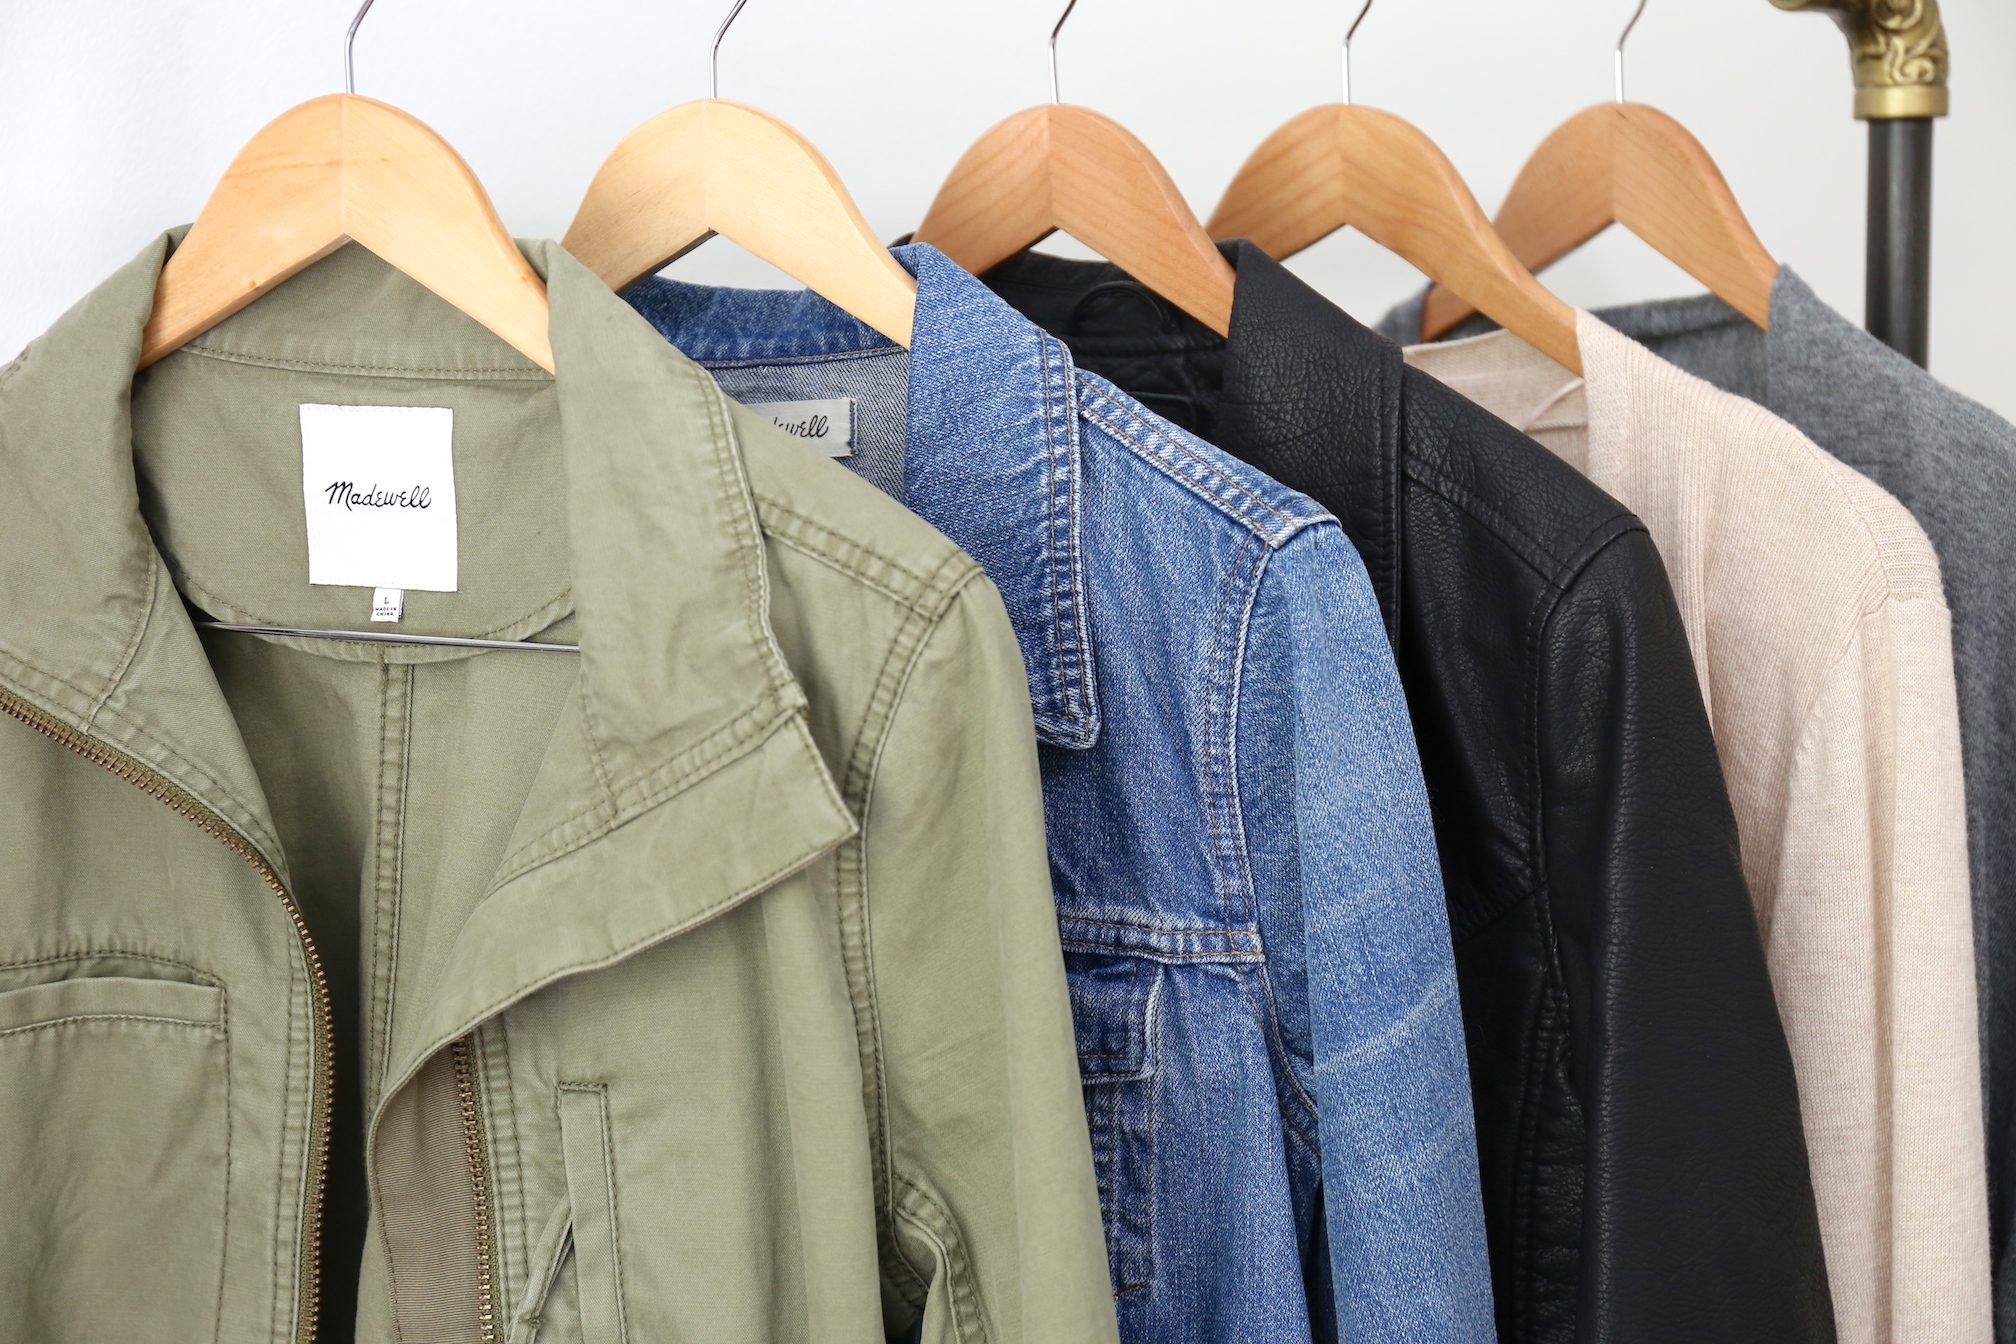 5 Fall Layering Essentials - top - cardigans denim jacket utility jacket leather jacket.jpg